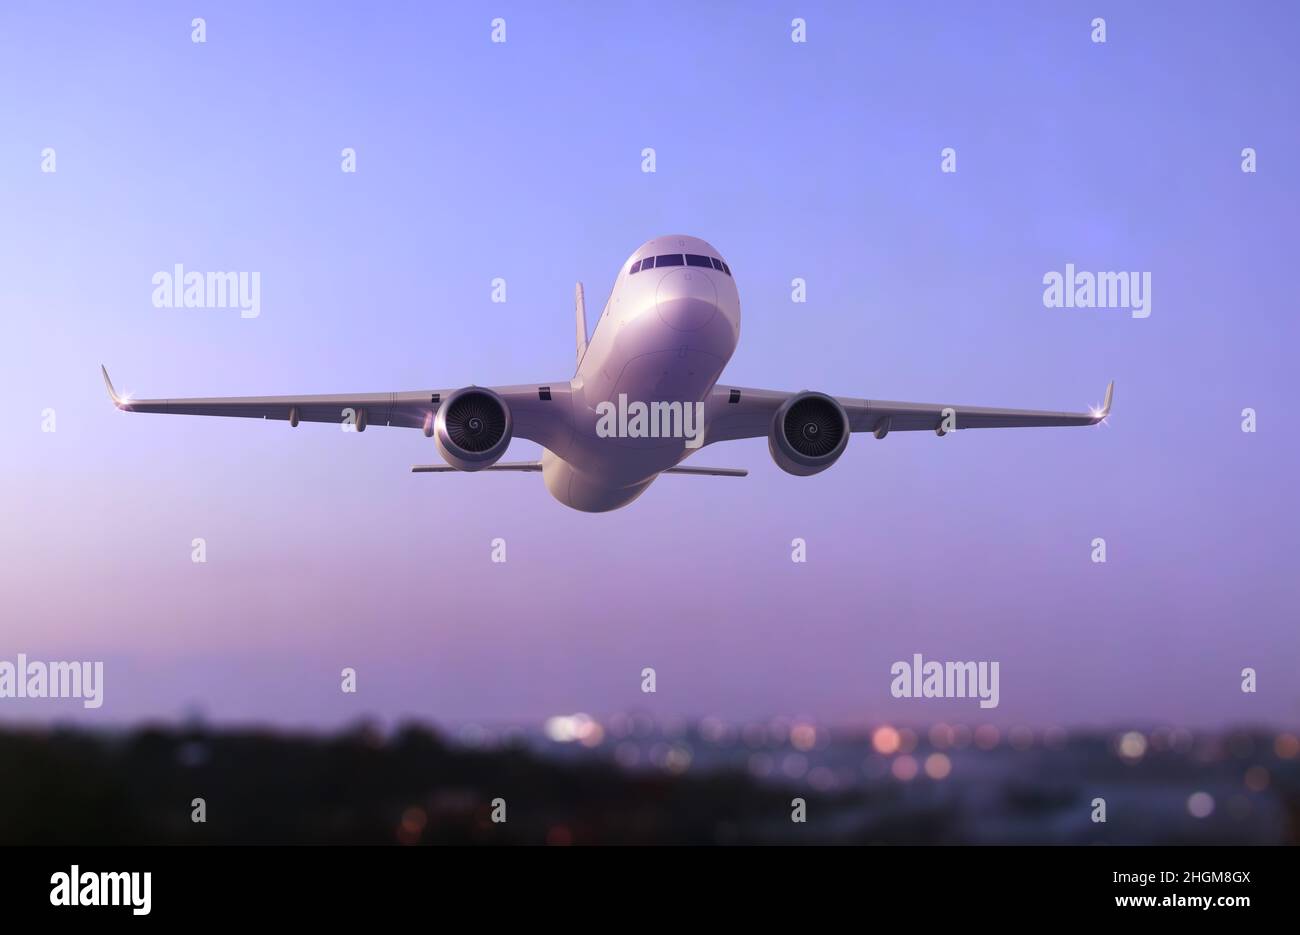 Aeroplane flying in the evening, illustration Stock Photo